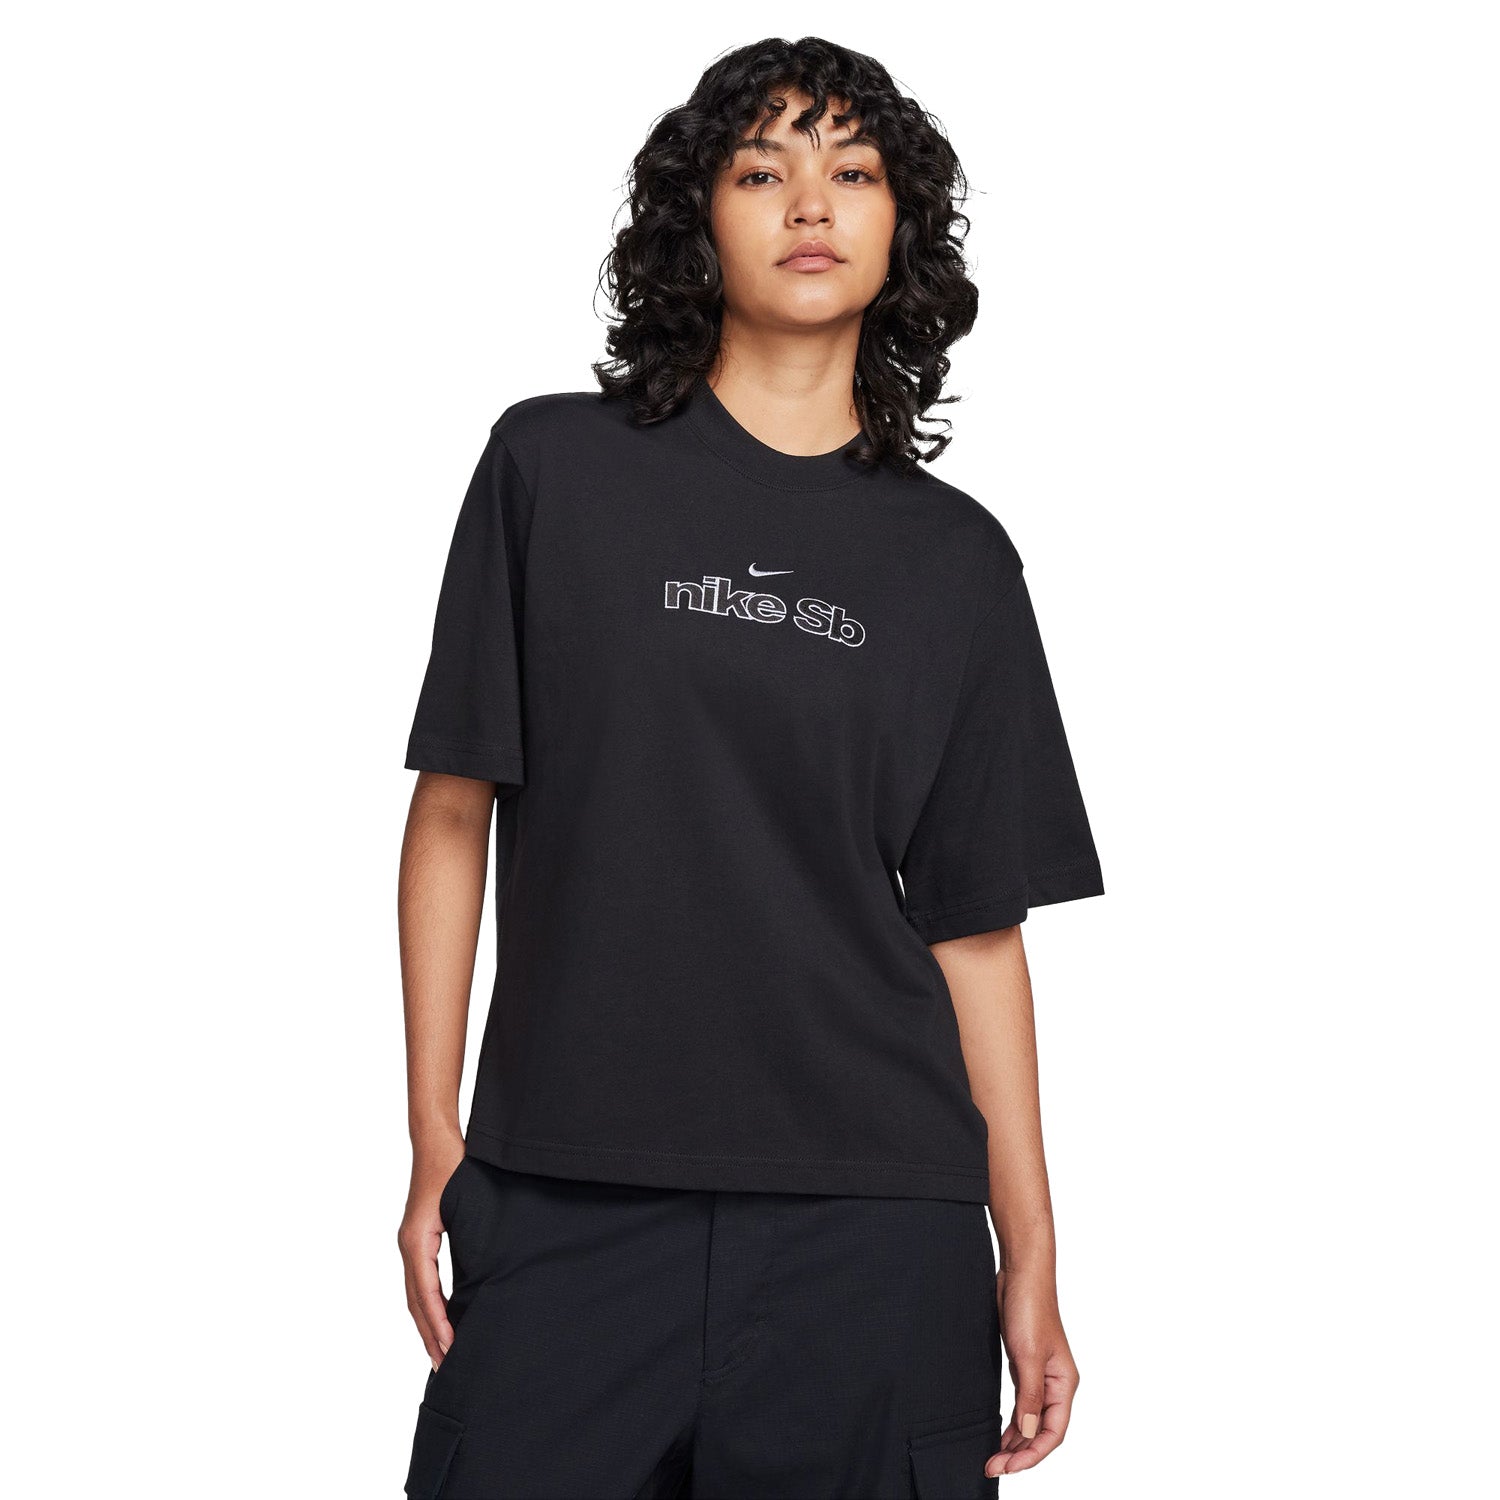 Nike SB Women's Embroidered Skate T-Shirt Black